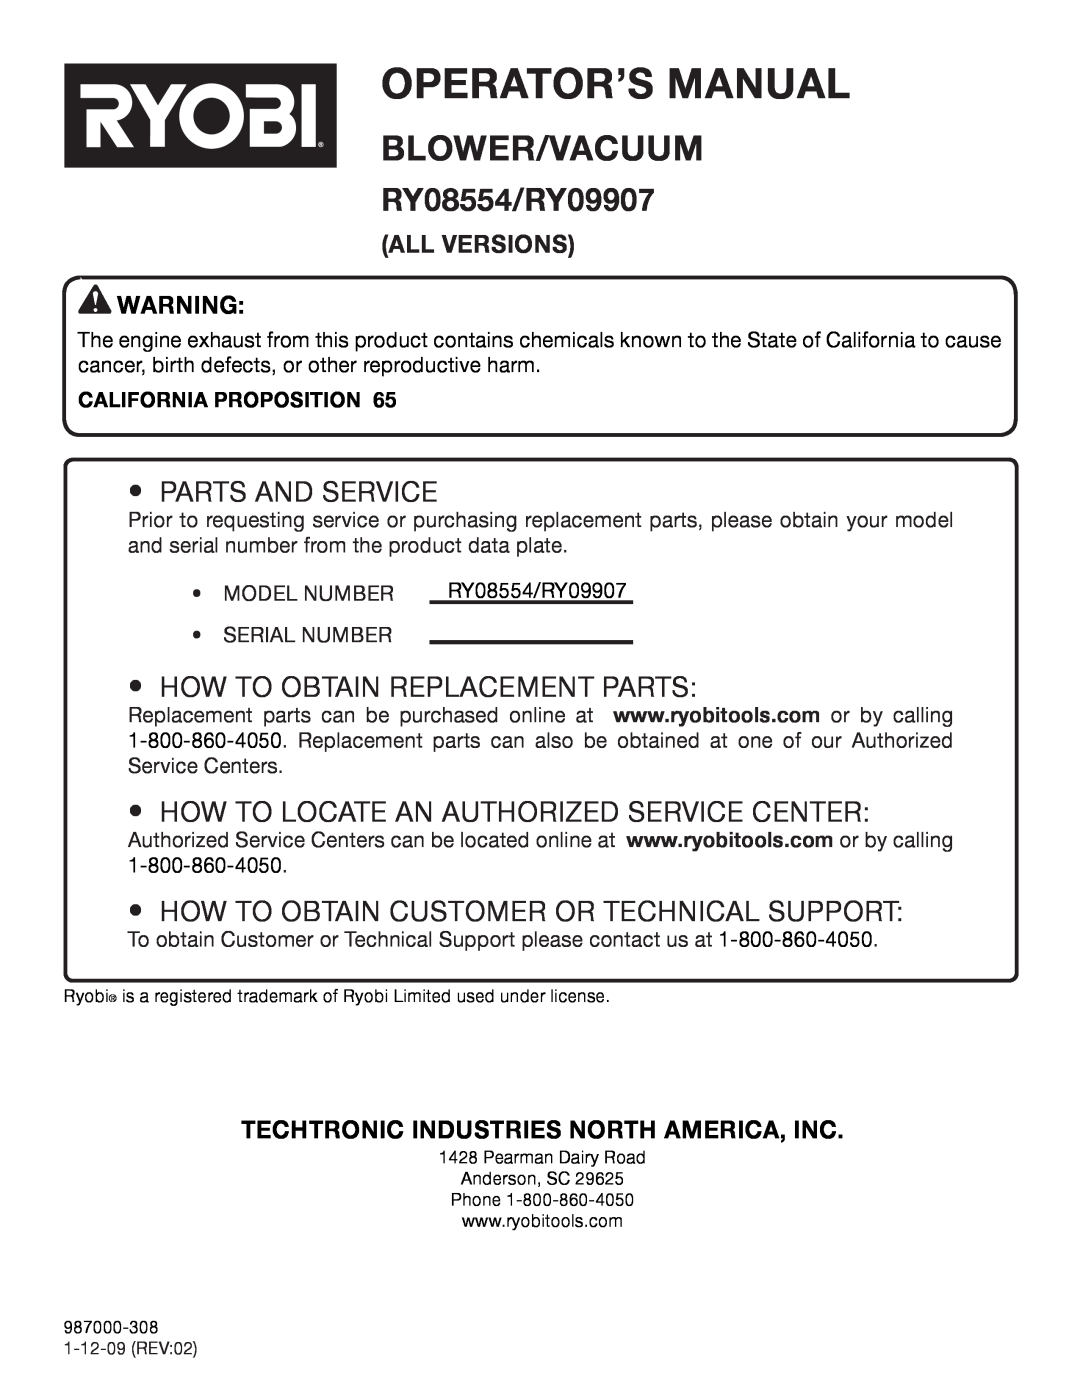 Ryobi RY09907, RY08554 Techtronic Industries North America, Inc, California Proposition, Operator’S Manual, Blower/Vacuum 